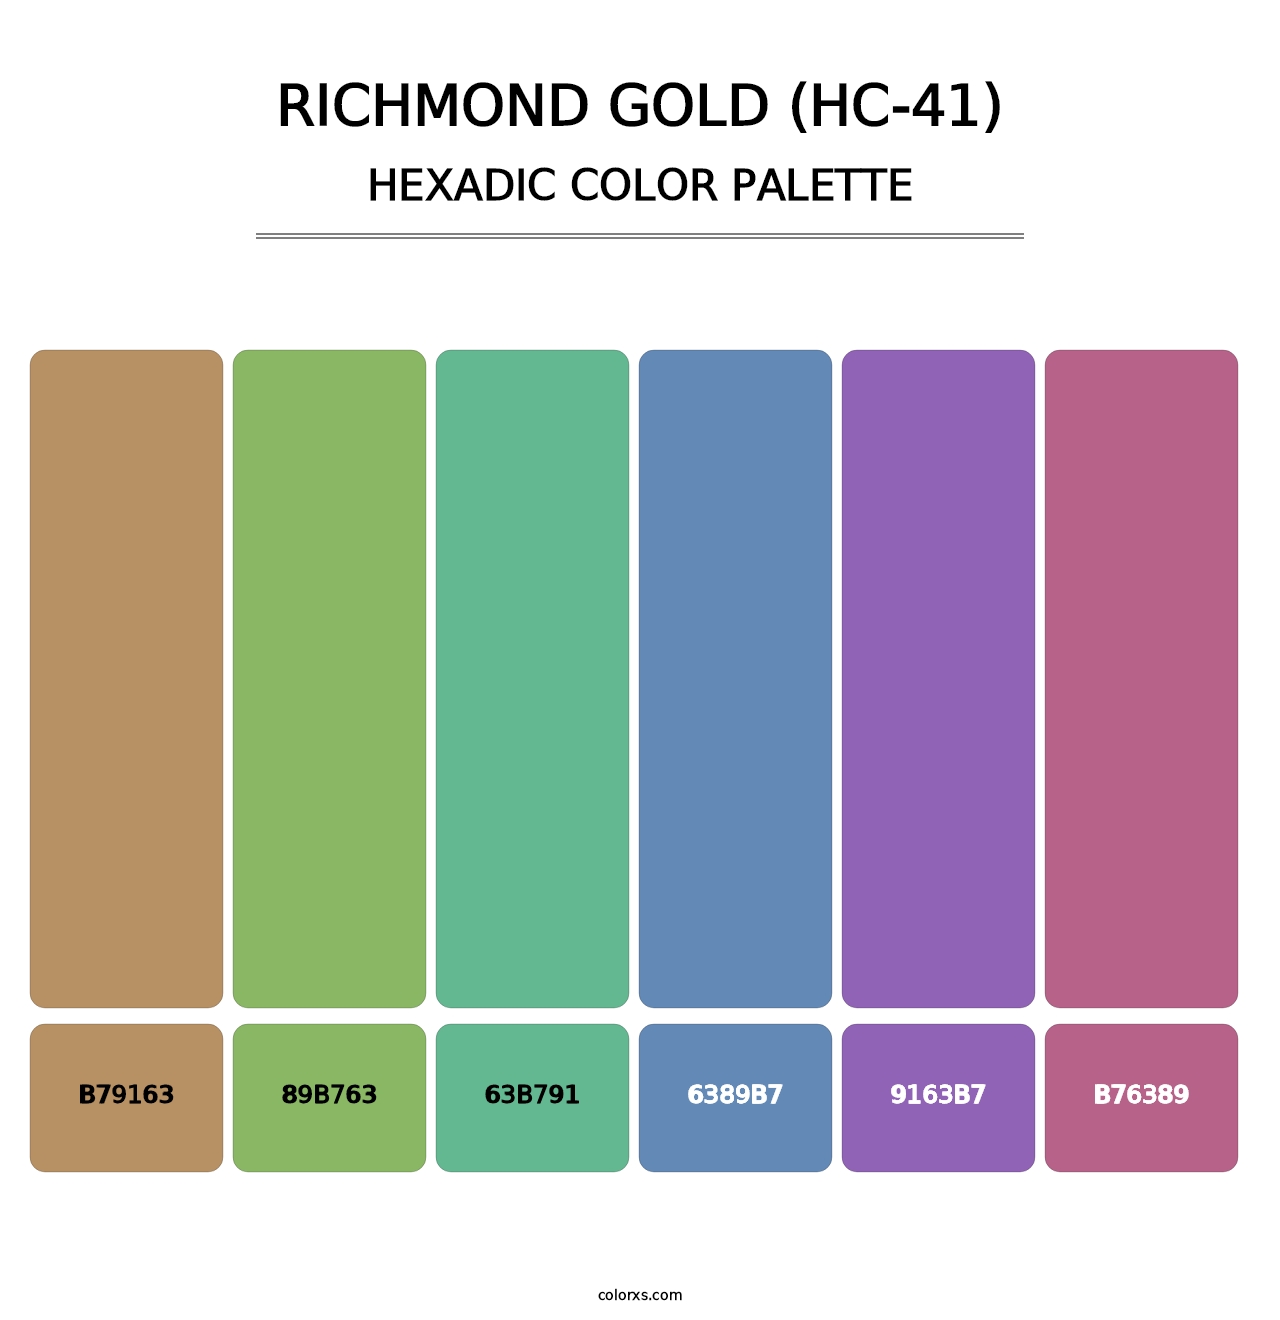 Richmond Gold (HC-41) - Hexadic Color Palette